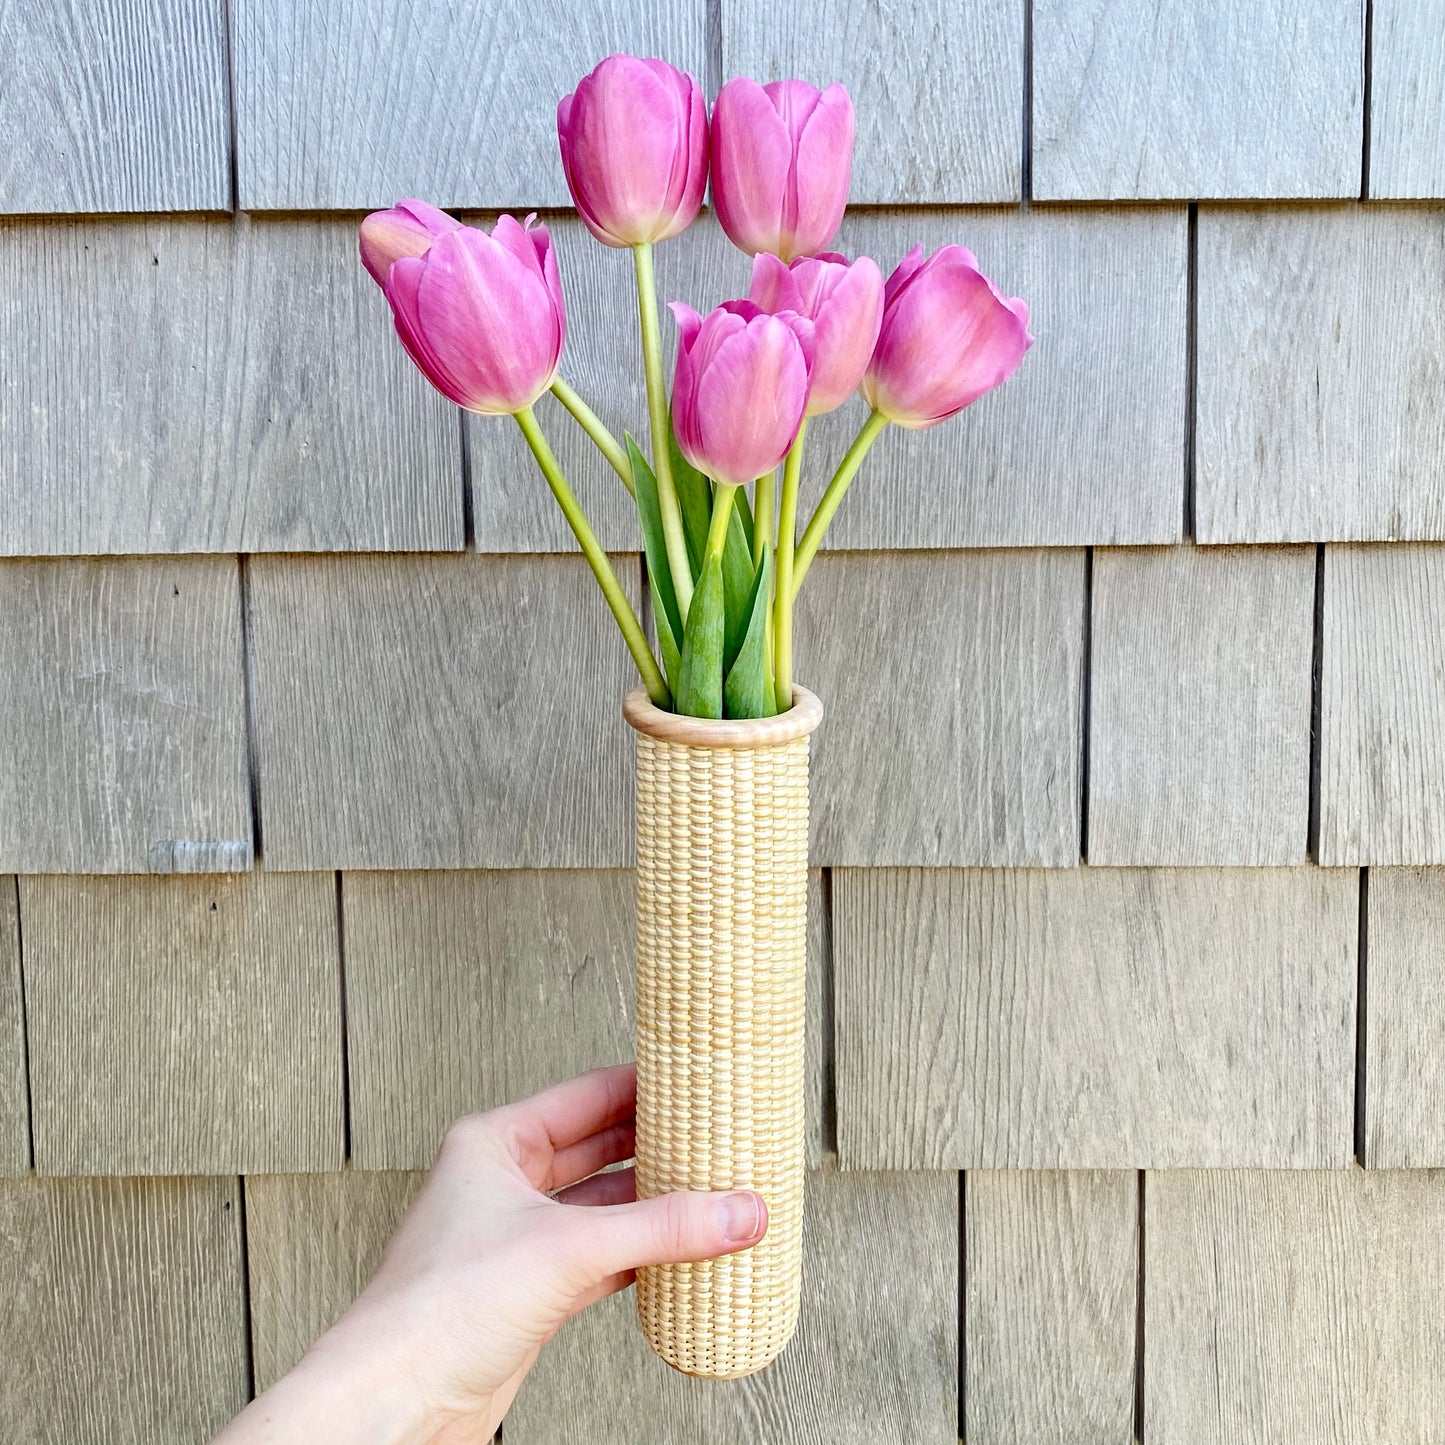 Handwoven Bud Basket 1.75" x 8" holding pink tulips